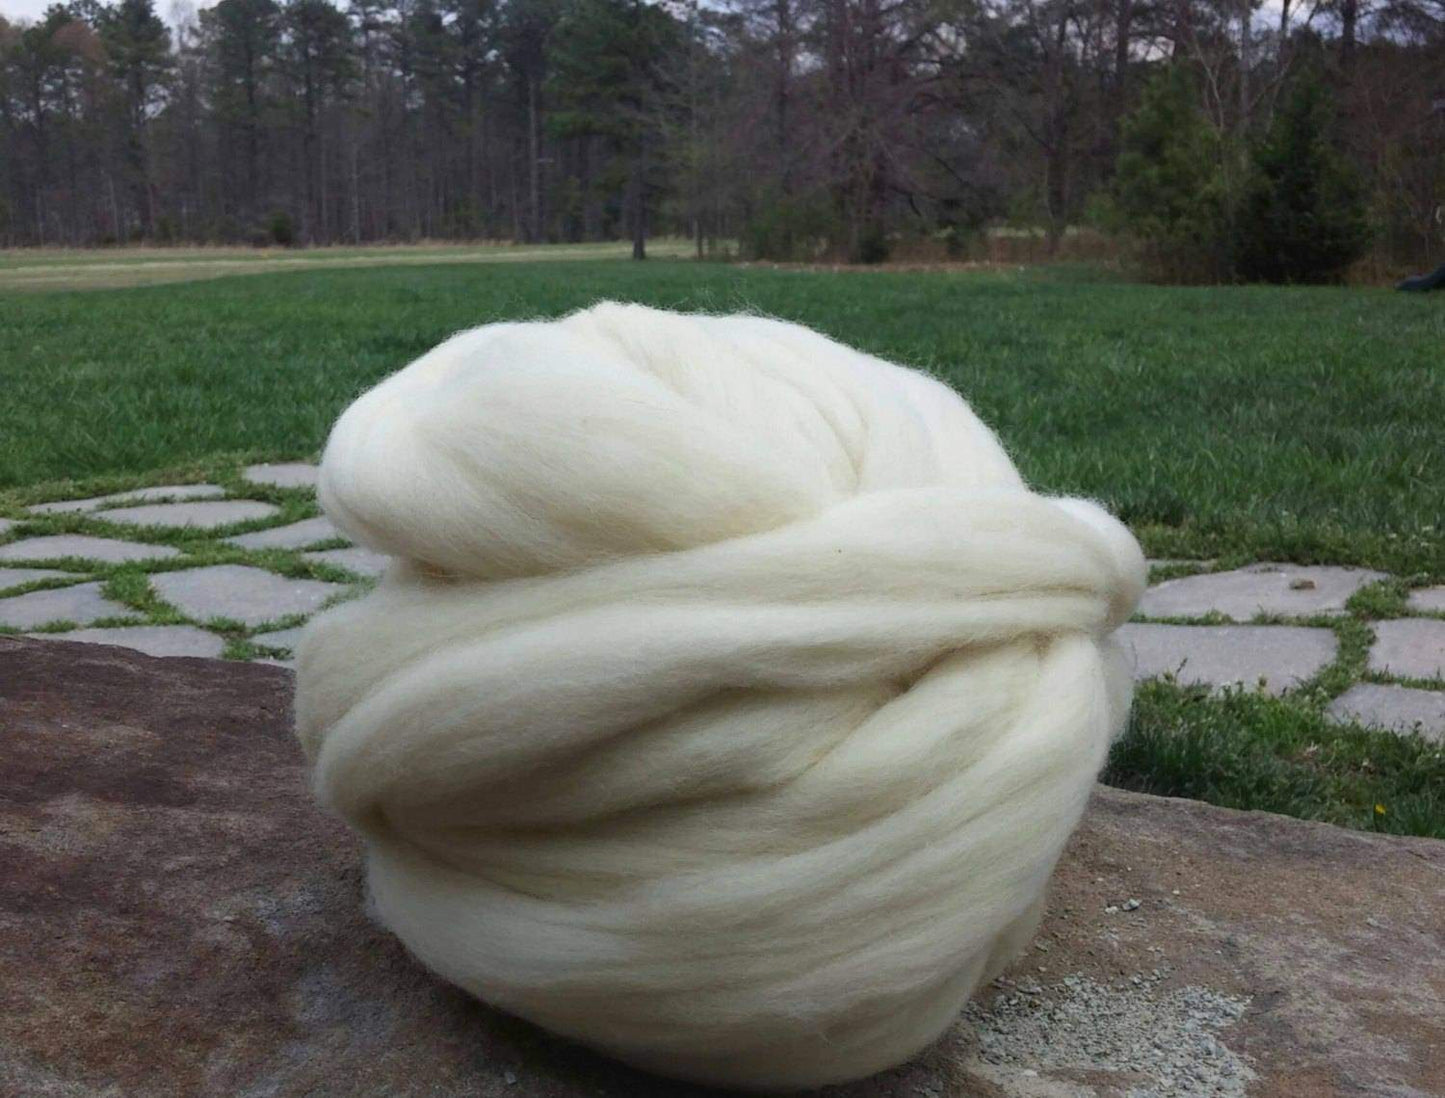 Nuno Wool Roving, 1lb (or MORE!), Wool for Nuno felting, Roving, wool –  Shep's Wool